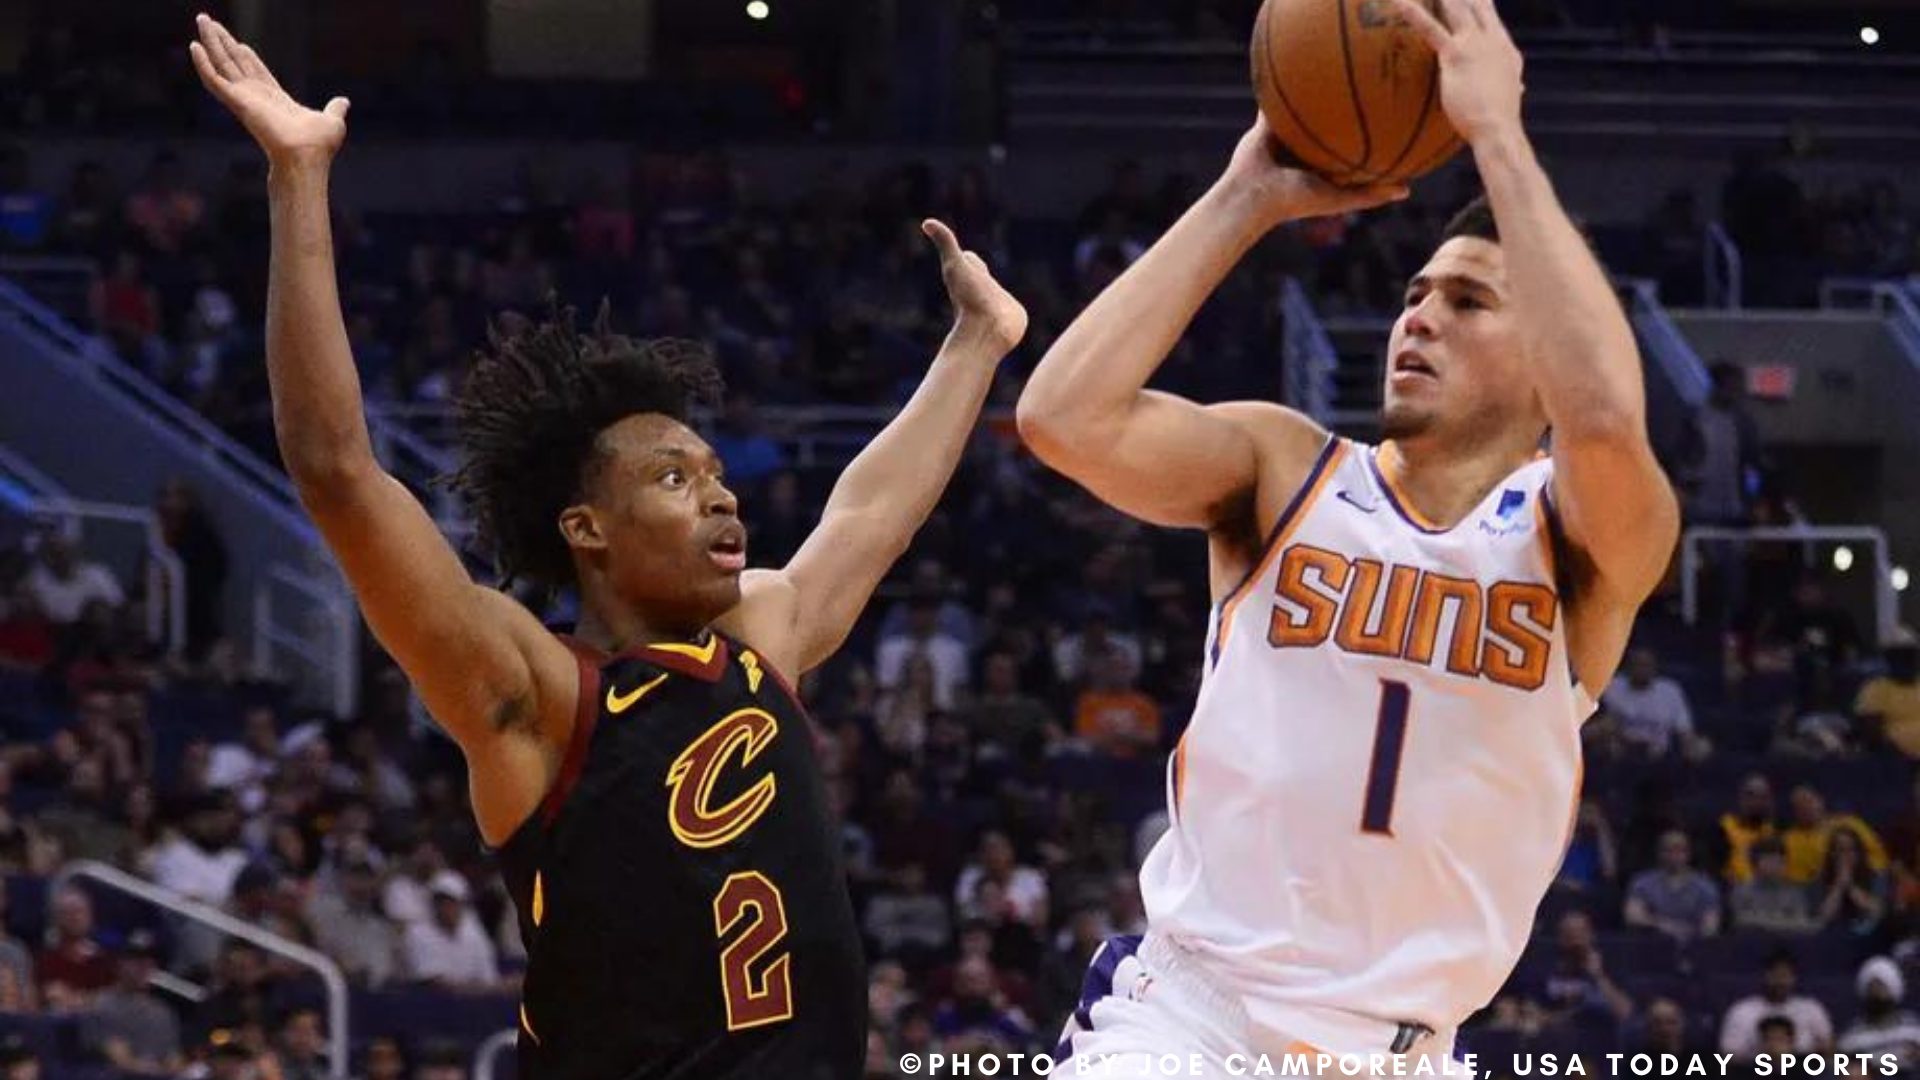 Suns still on a winning streak, beating Cavaliers 134-118